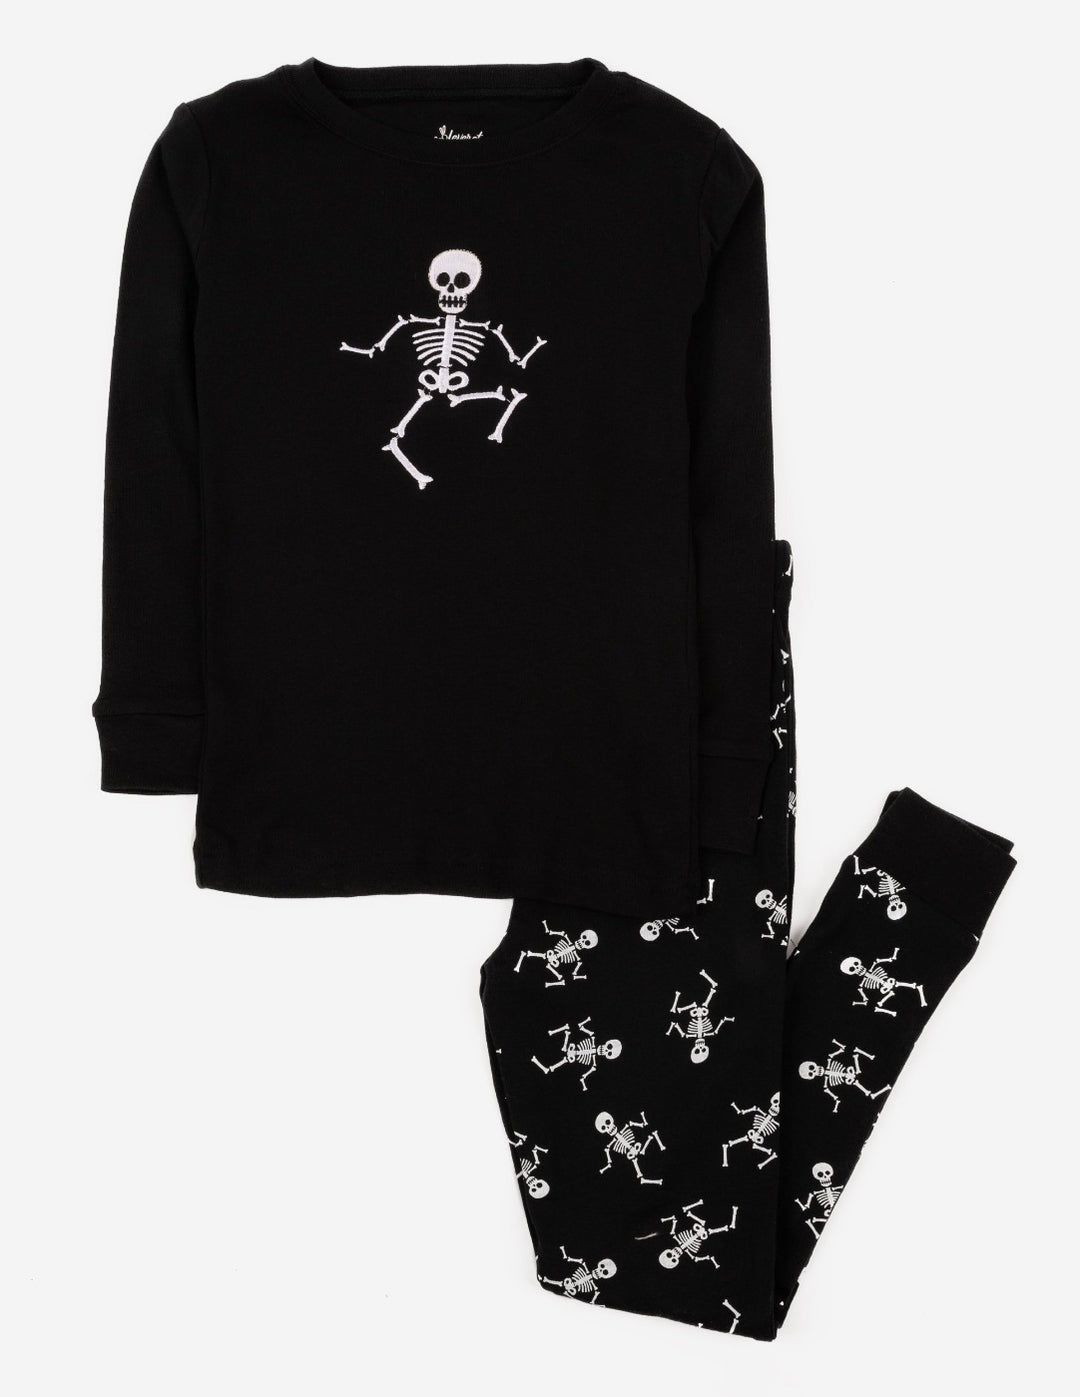 Laqeyko Women's Halloween Pajamas Short Sleeve Sleepwear Skeleton